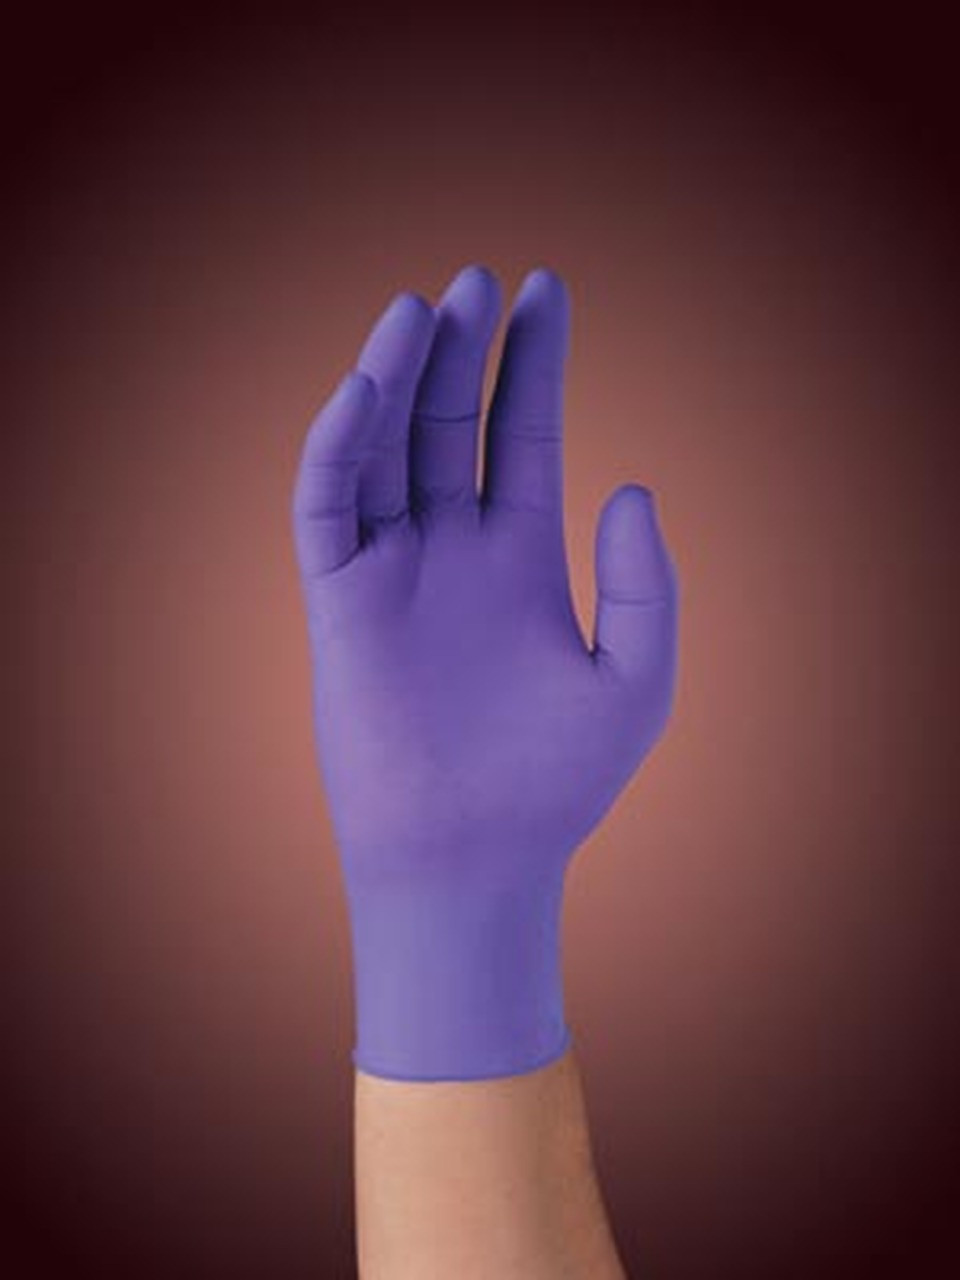 Halyard Kimguard Gloves, Medium, Sterile Pairs, 100/bx, 4/cs